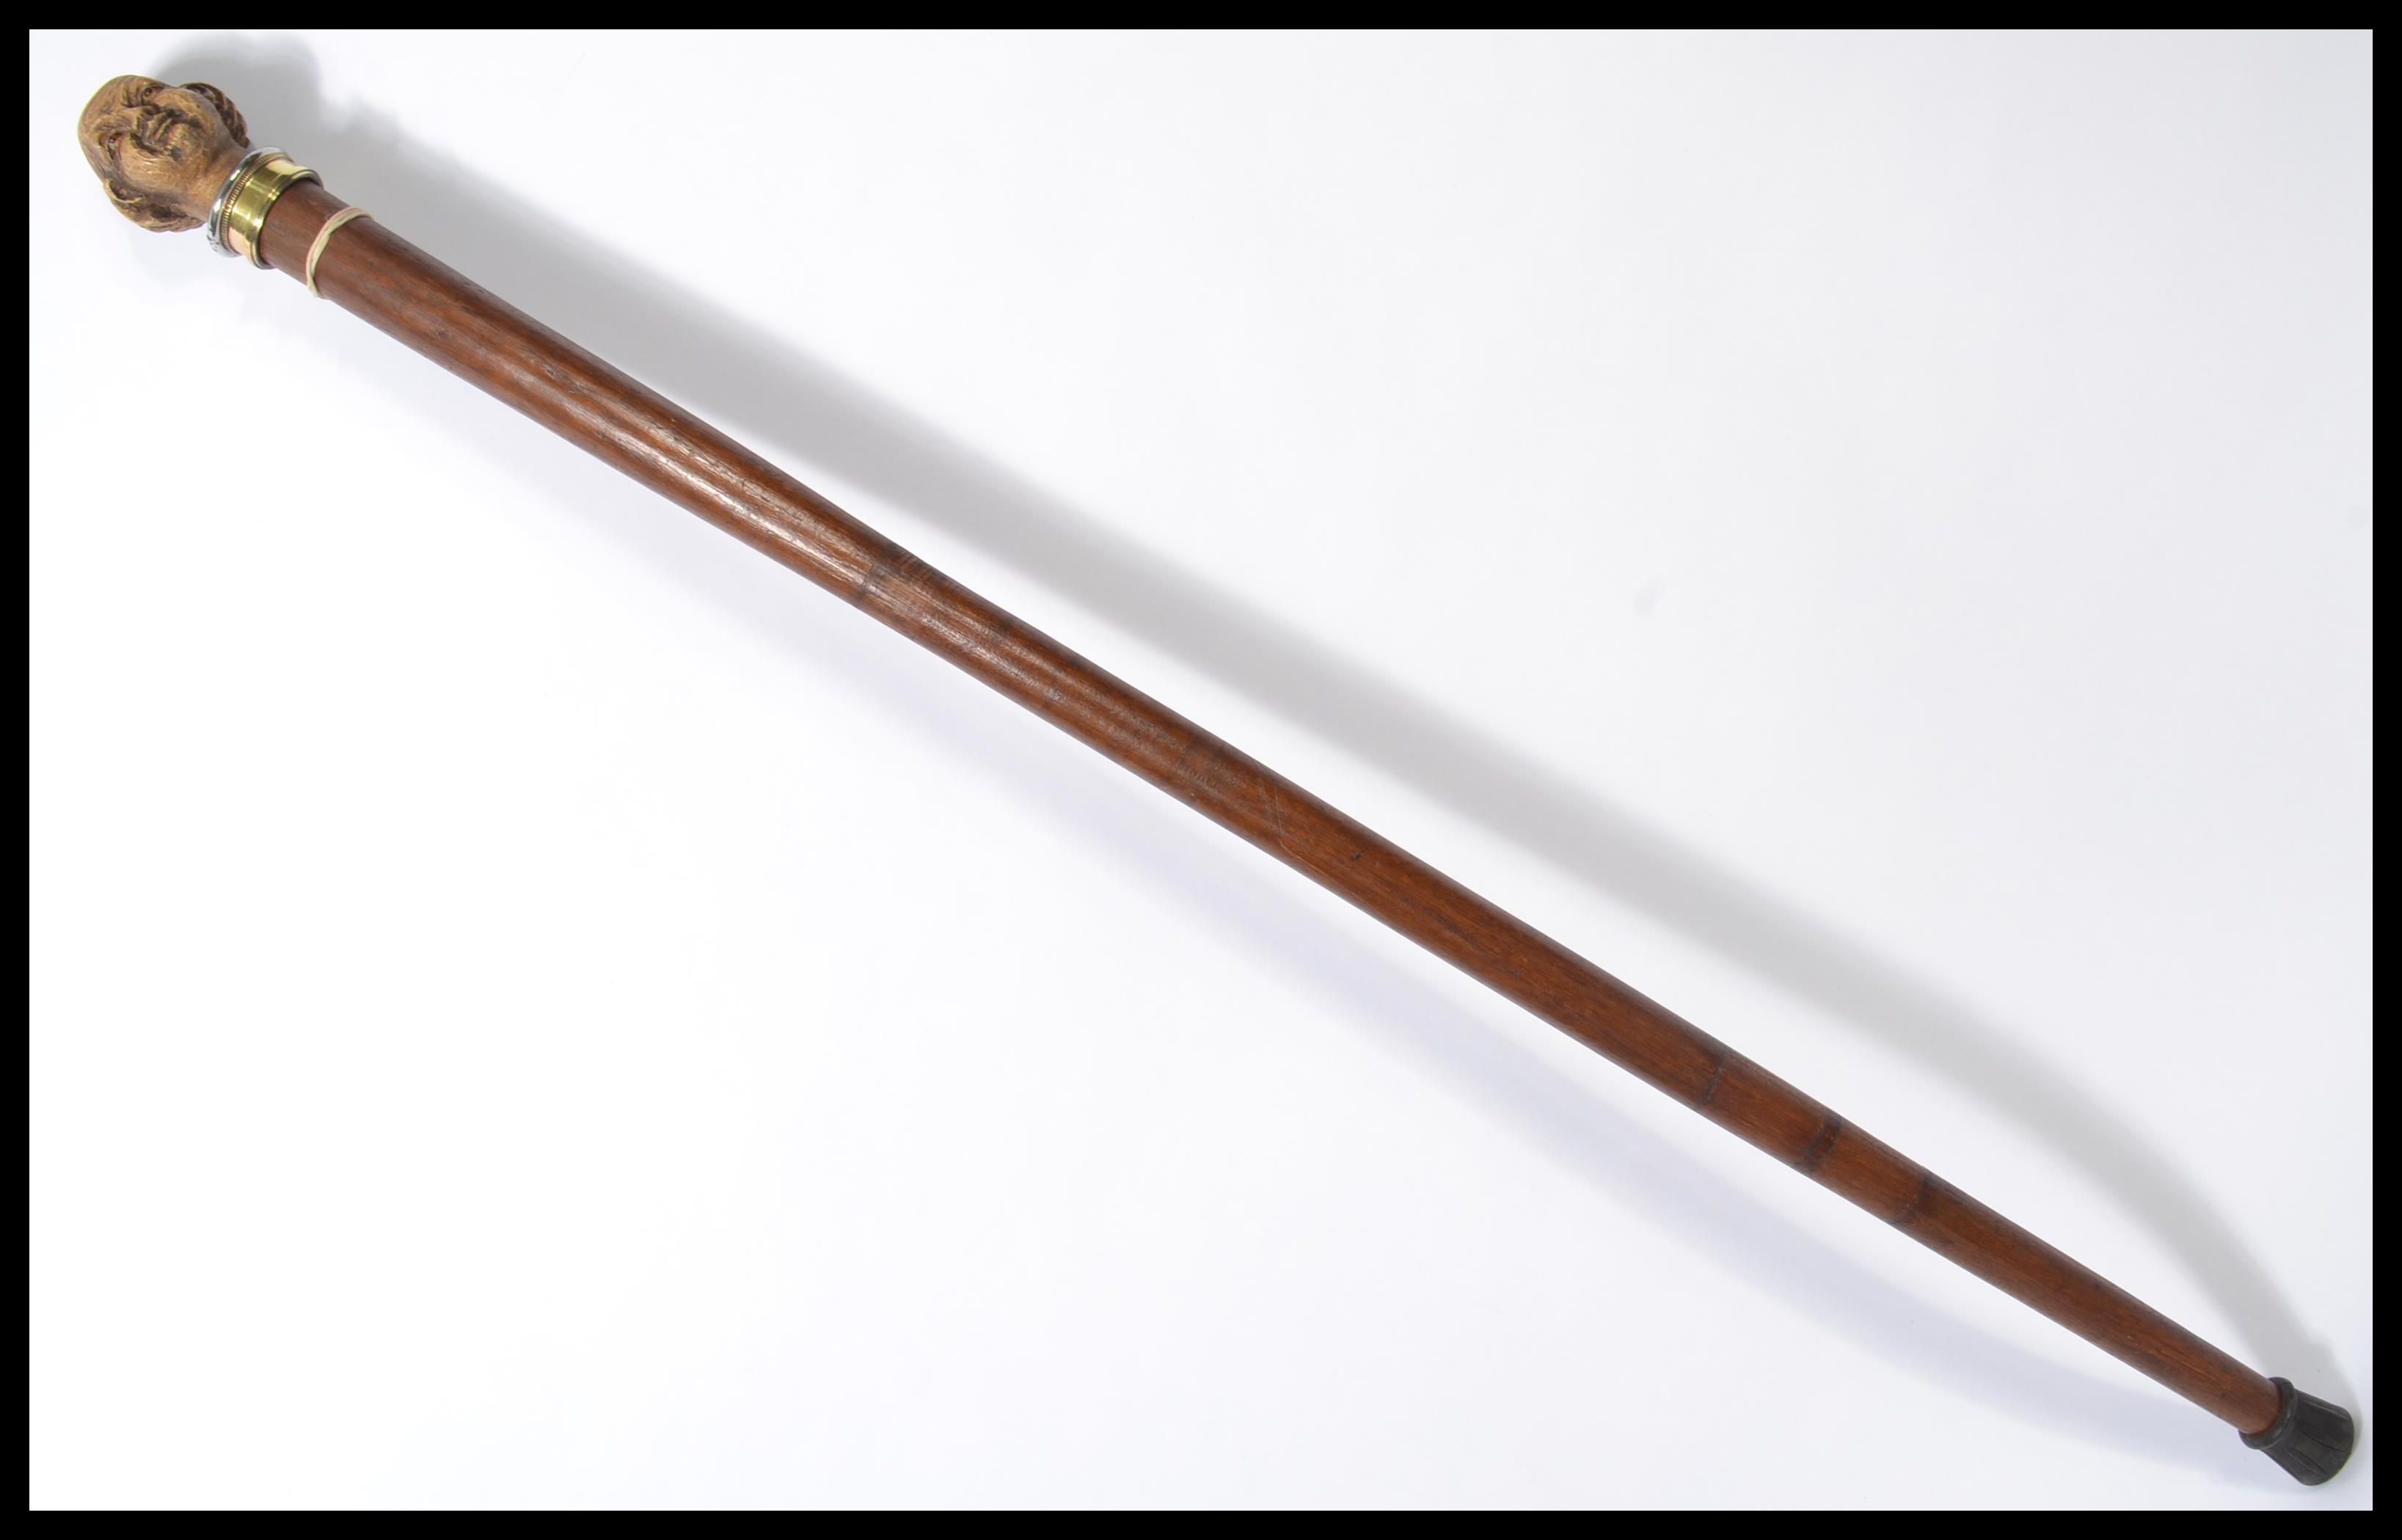 A vintage 20th century walking stick cane having a